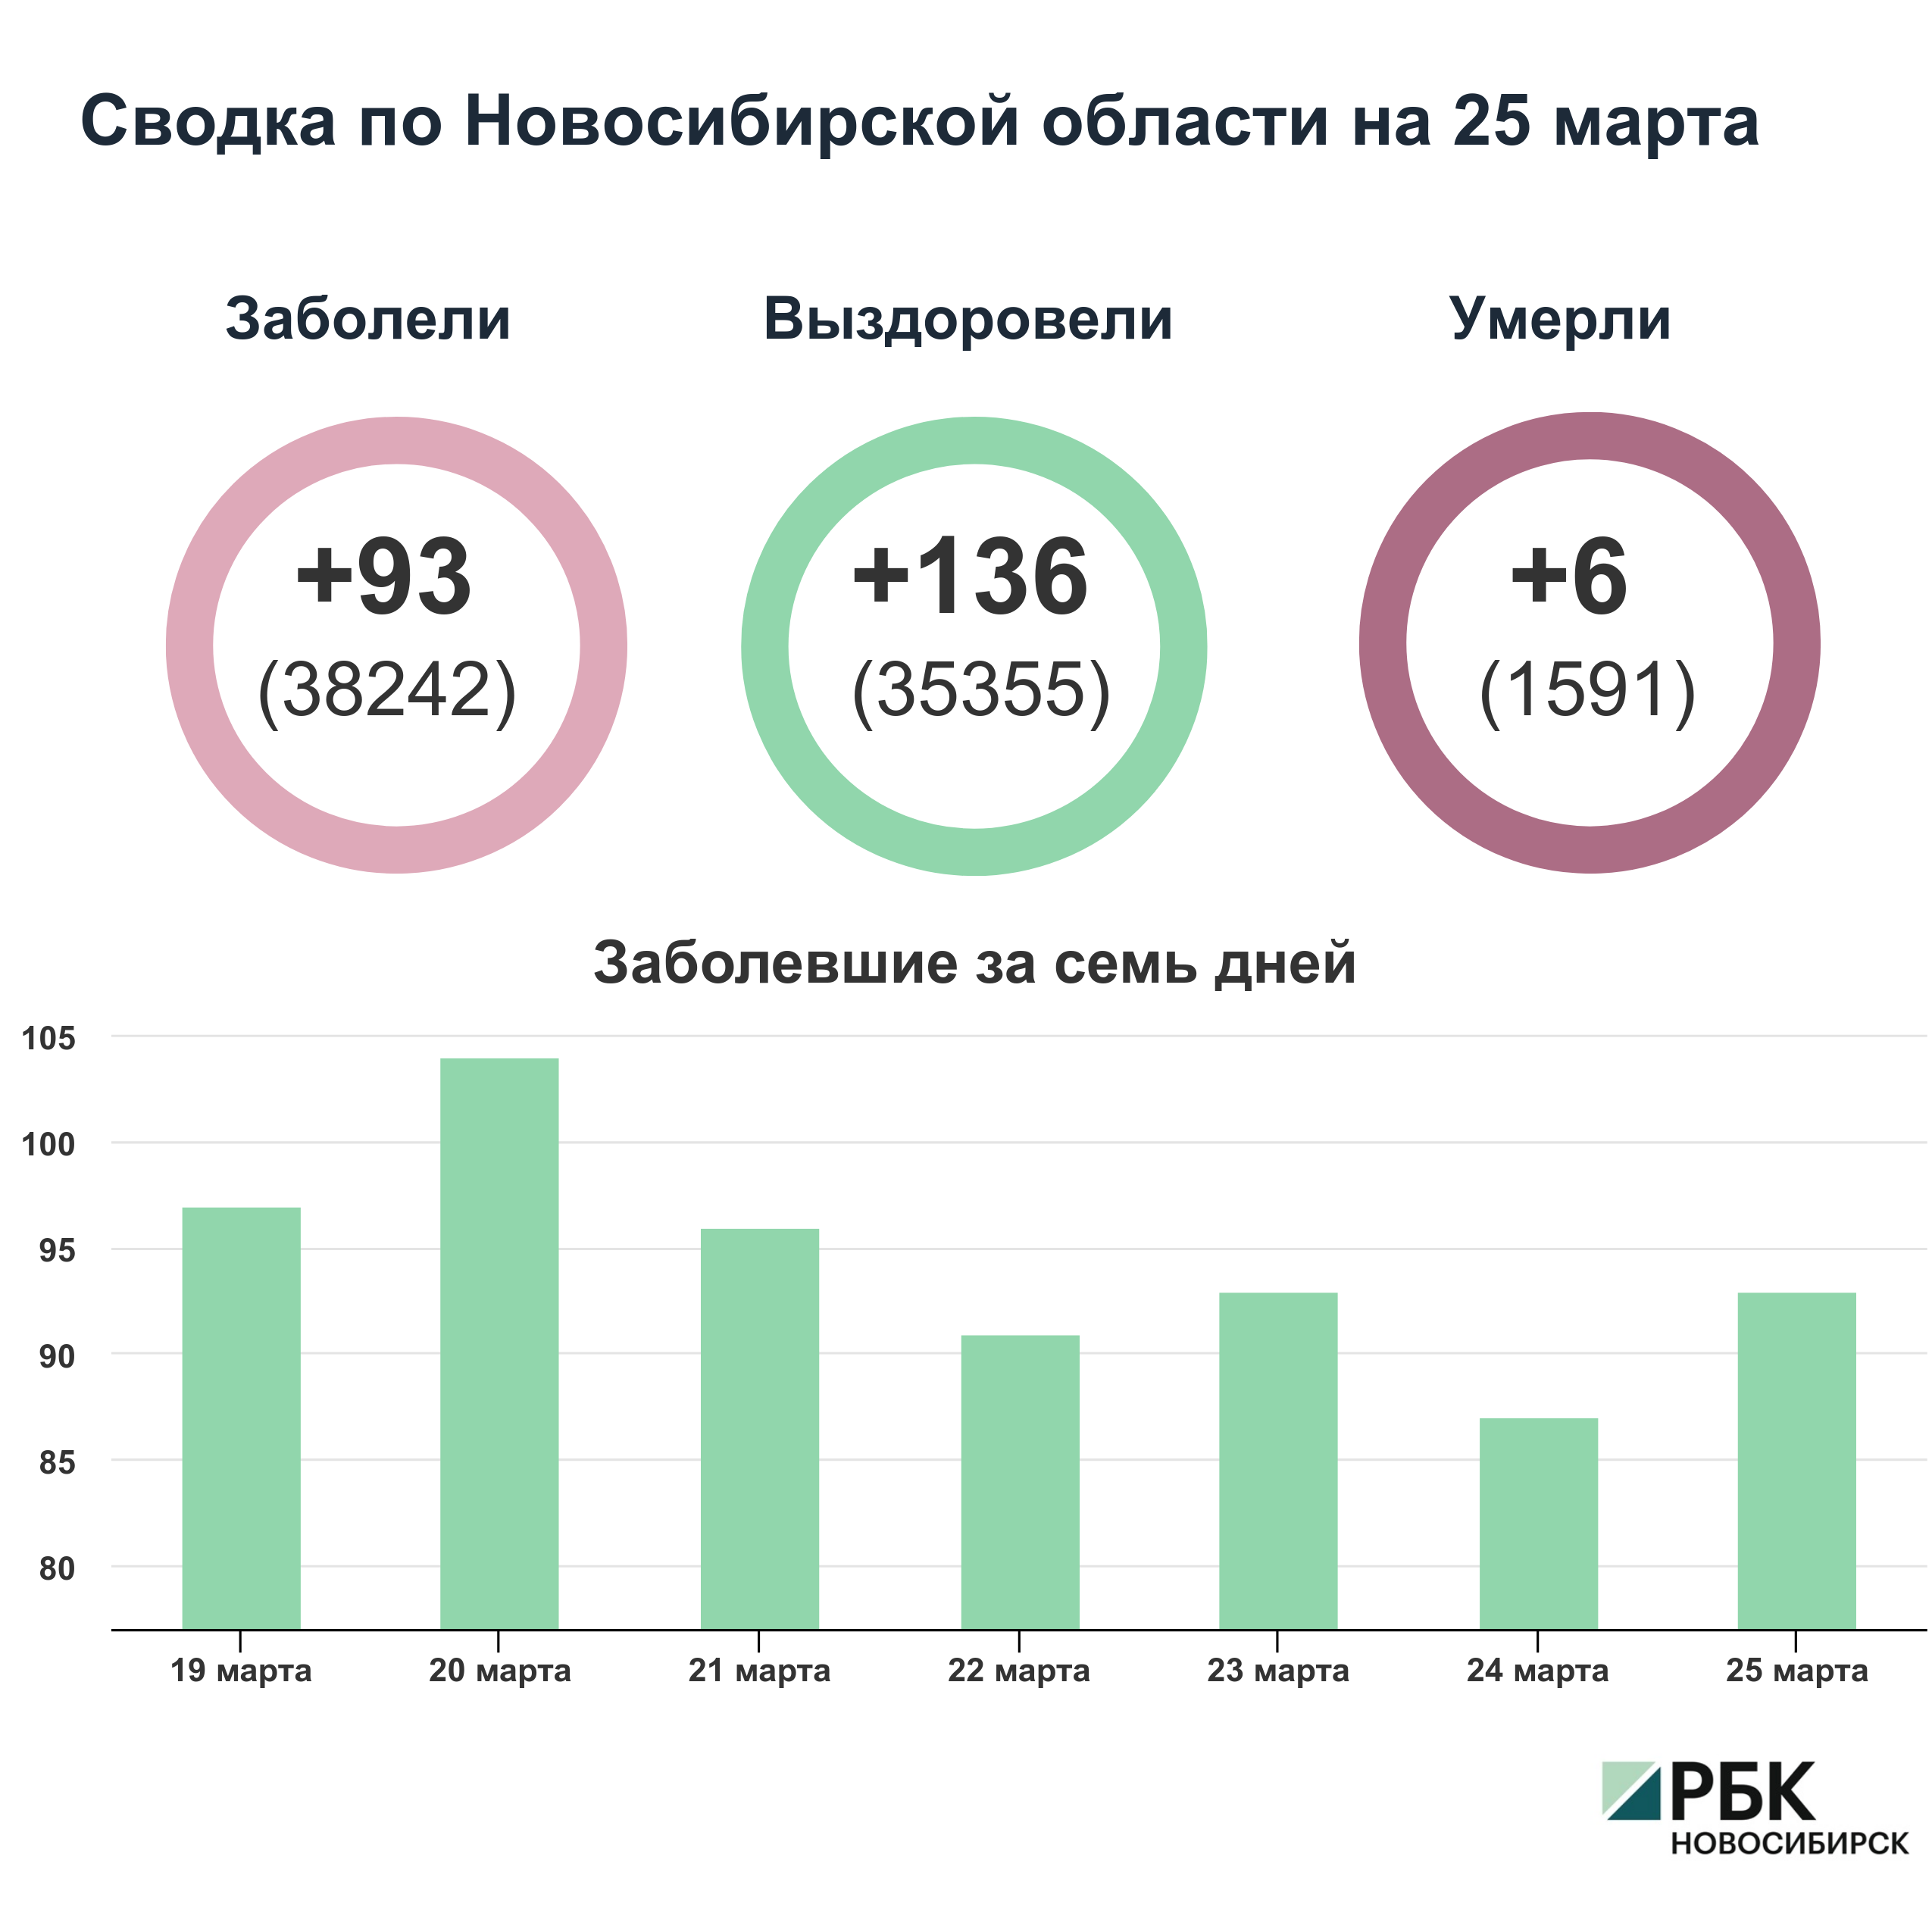 Коронавирус в Новосибирске: сводка на 25 марта